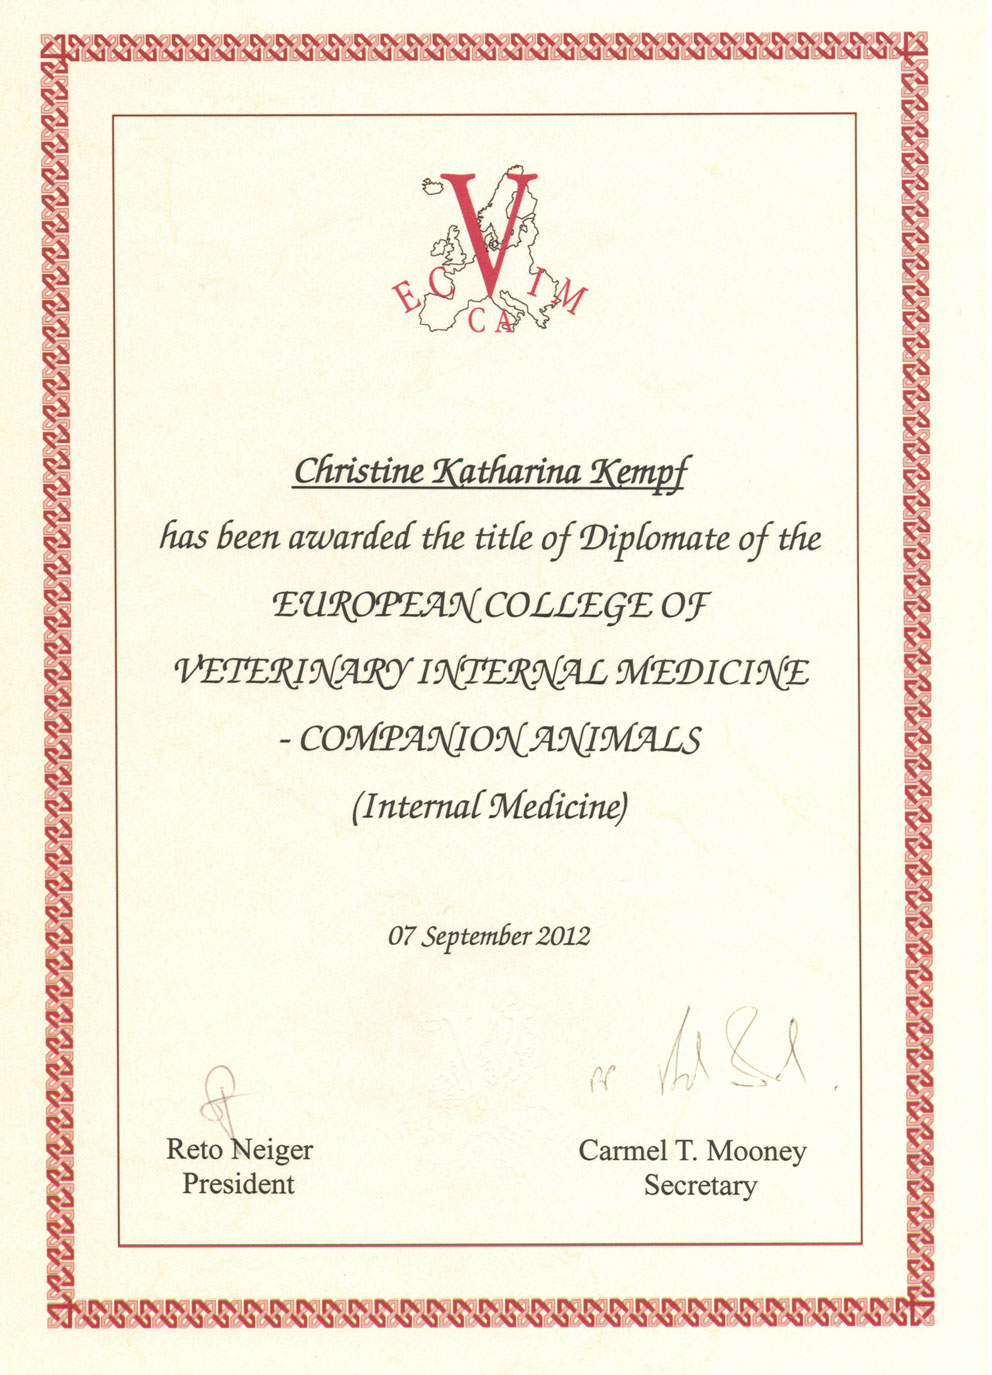 Urkunde-Diplomate of the European College of Veterinary Internal Medicin Companion Animals (ECVIM-CA)